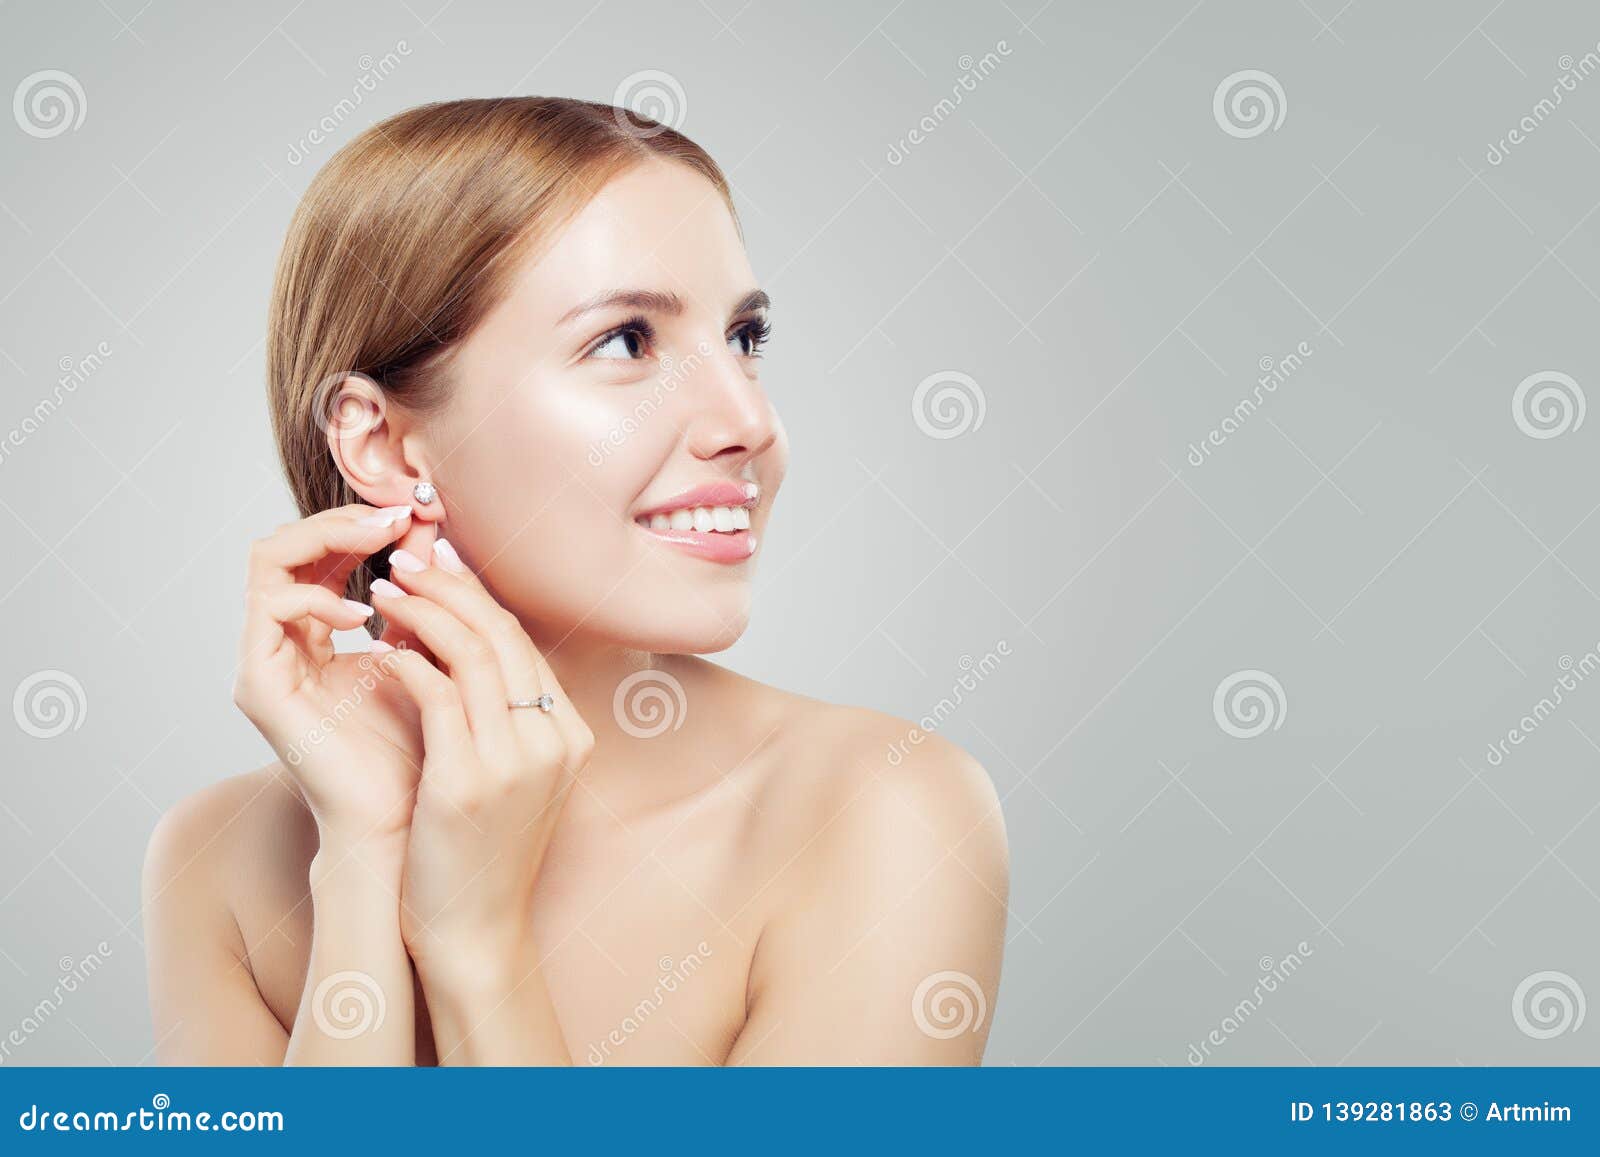 glamourous jewelry model. beautiful woman in diamond earrings and ring, fashion beauty portrait